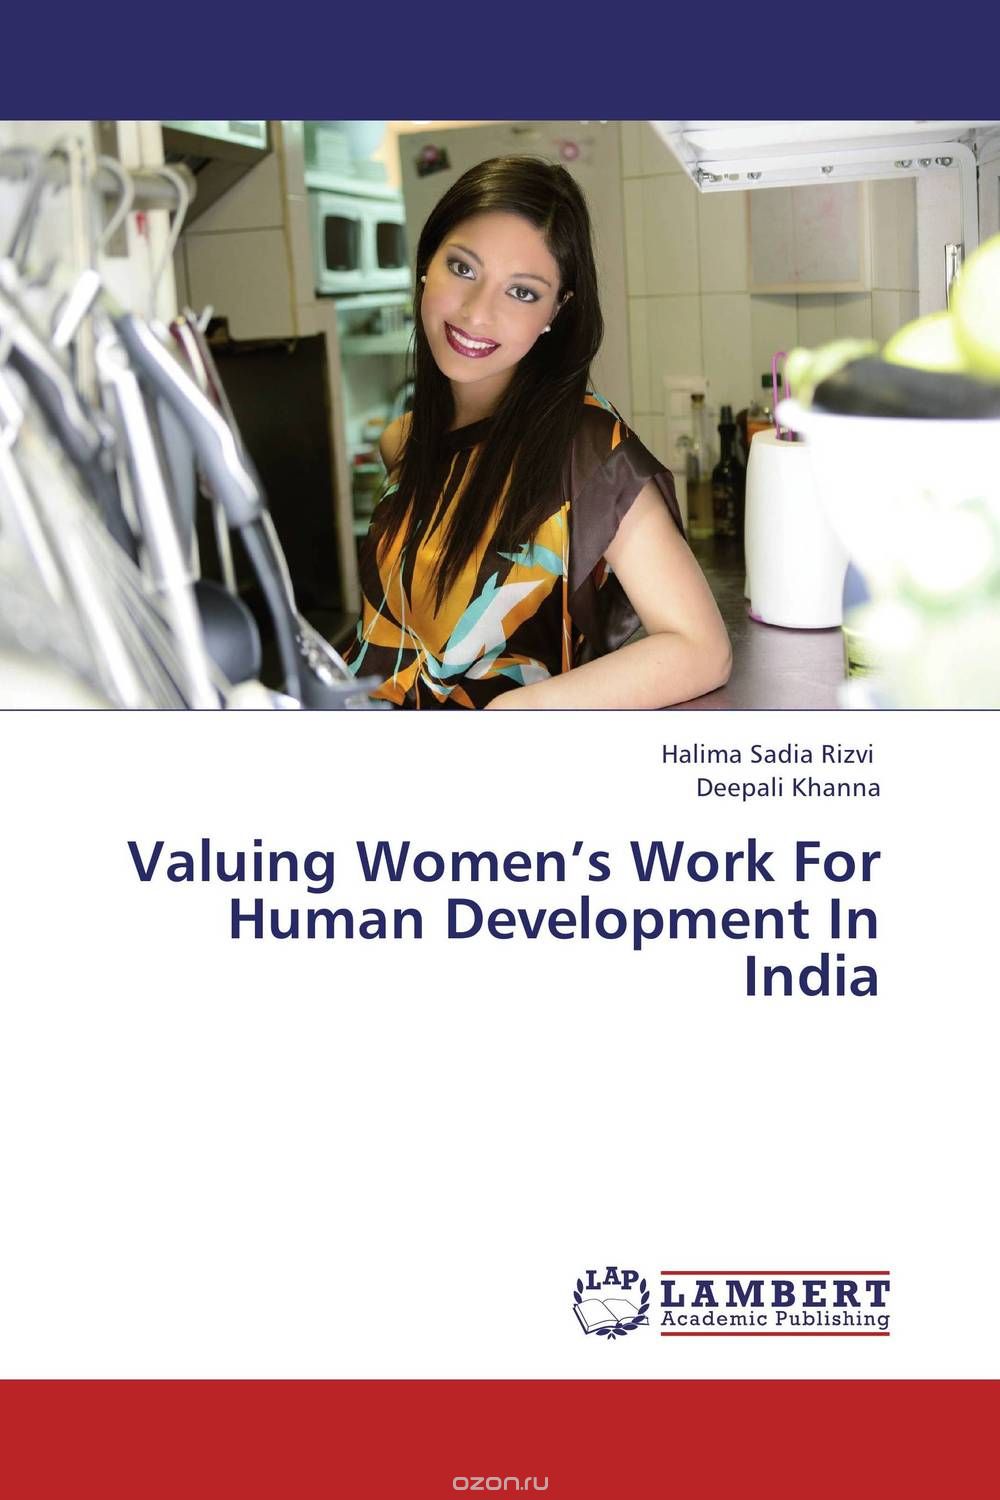 Скачать книгу "Valuing Women’s Work For Human Development In India"